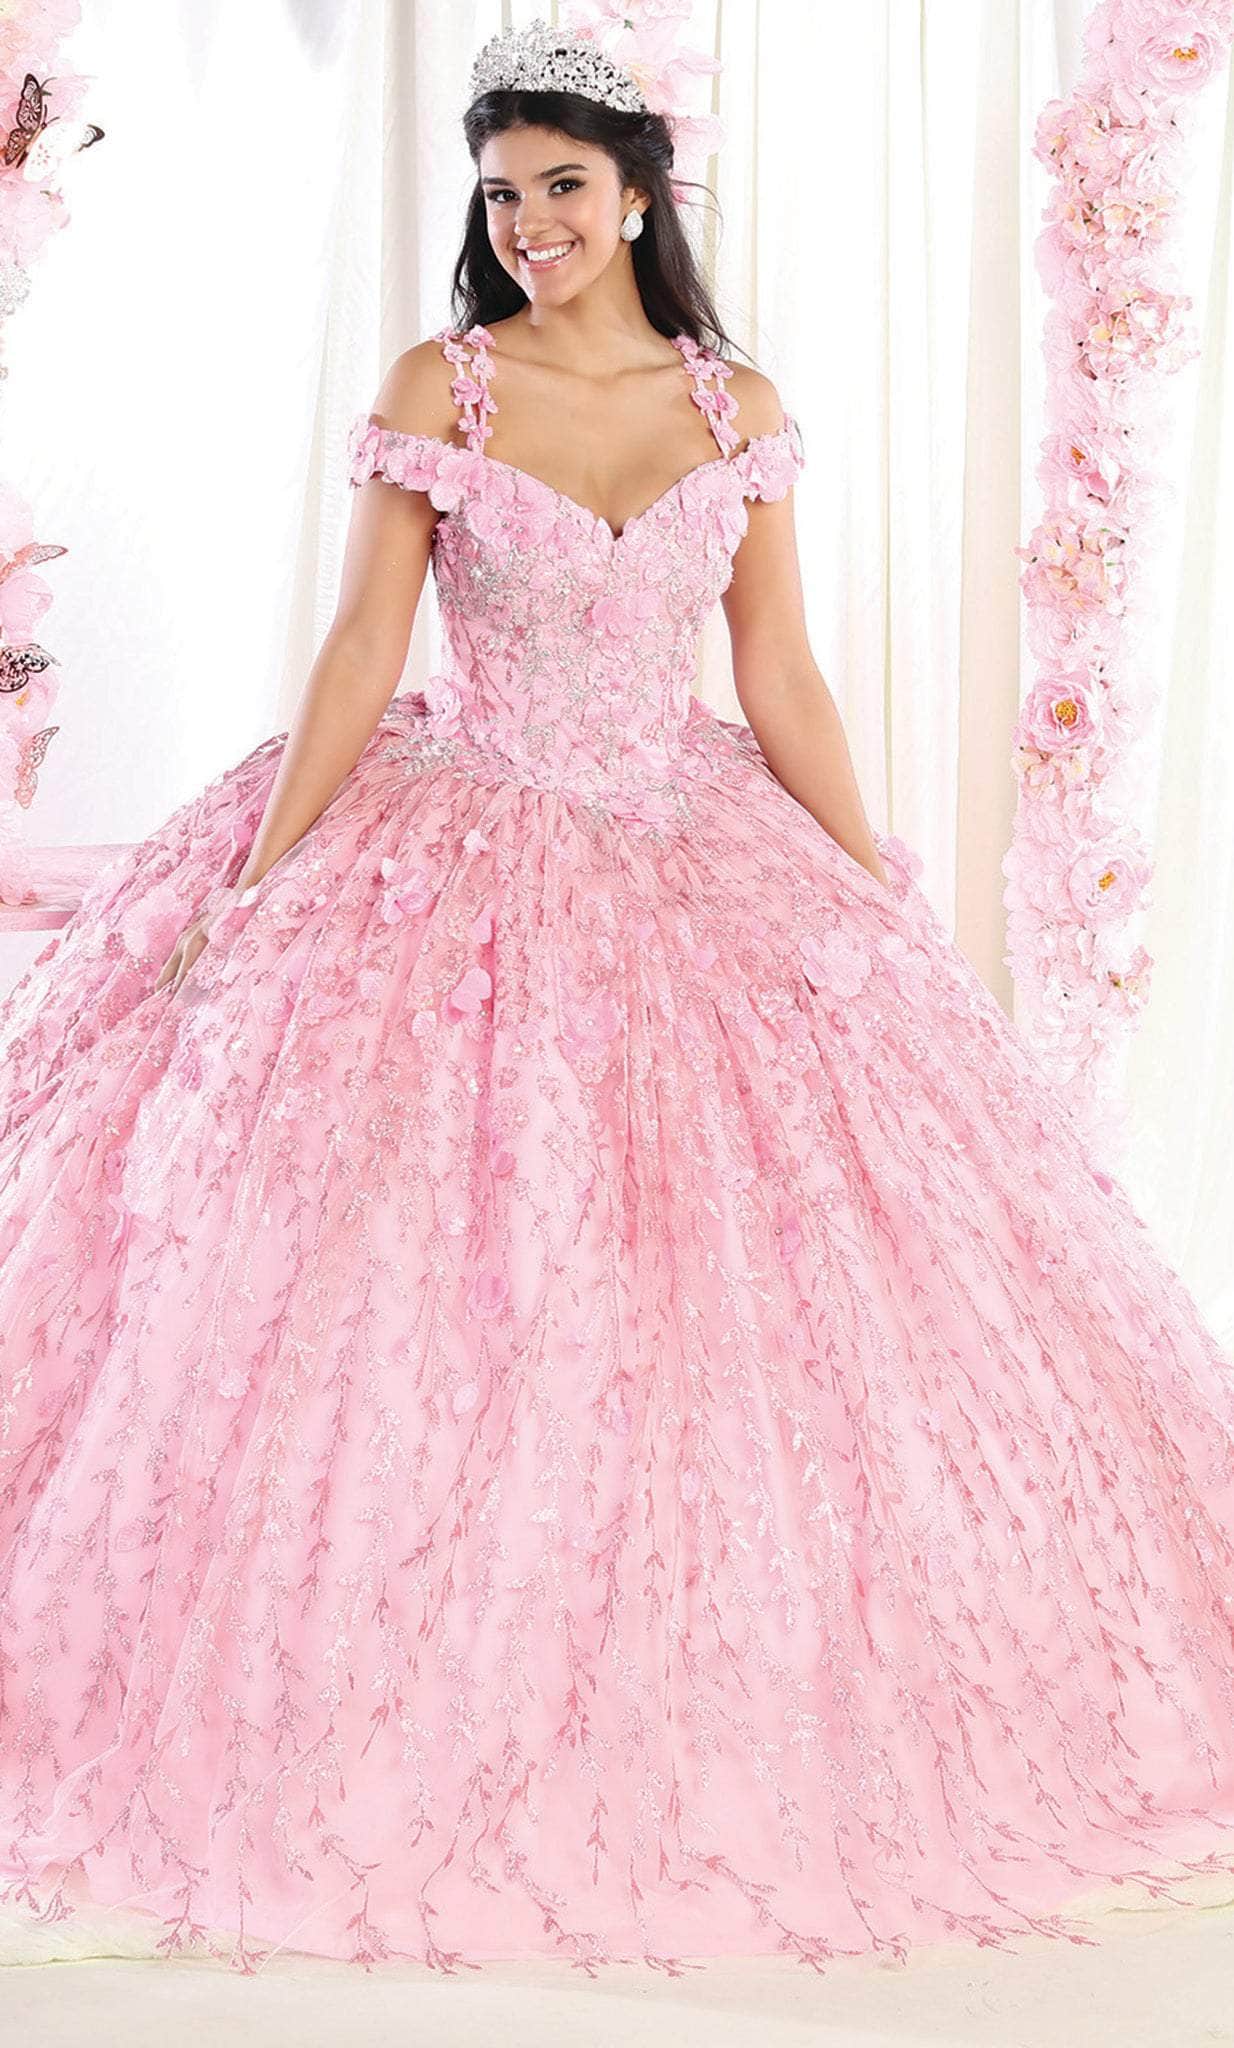 May Queen LK172 - Cold Shoulder Quinceanera Ballgown Quinceanera Dresses 4 / Pink